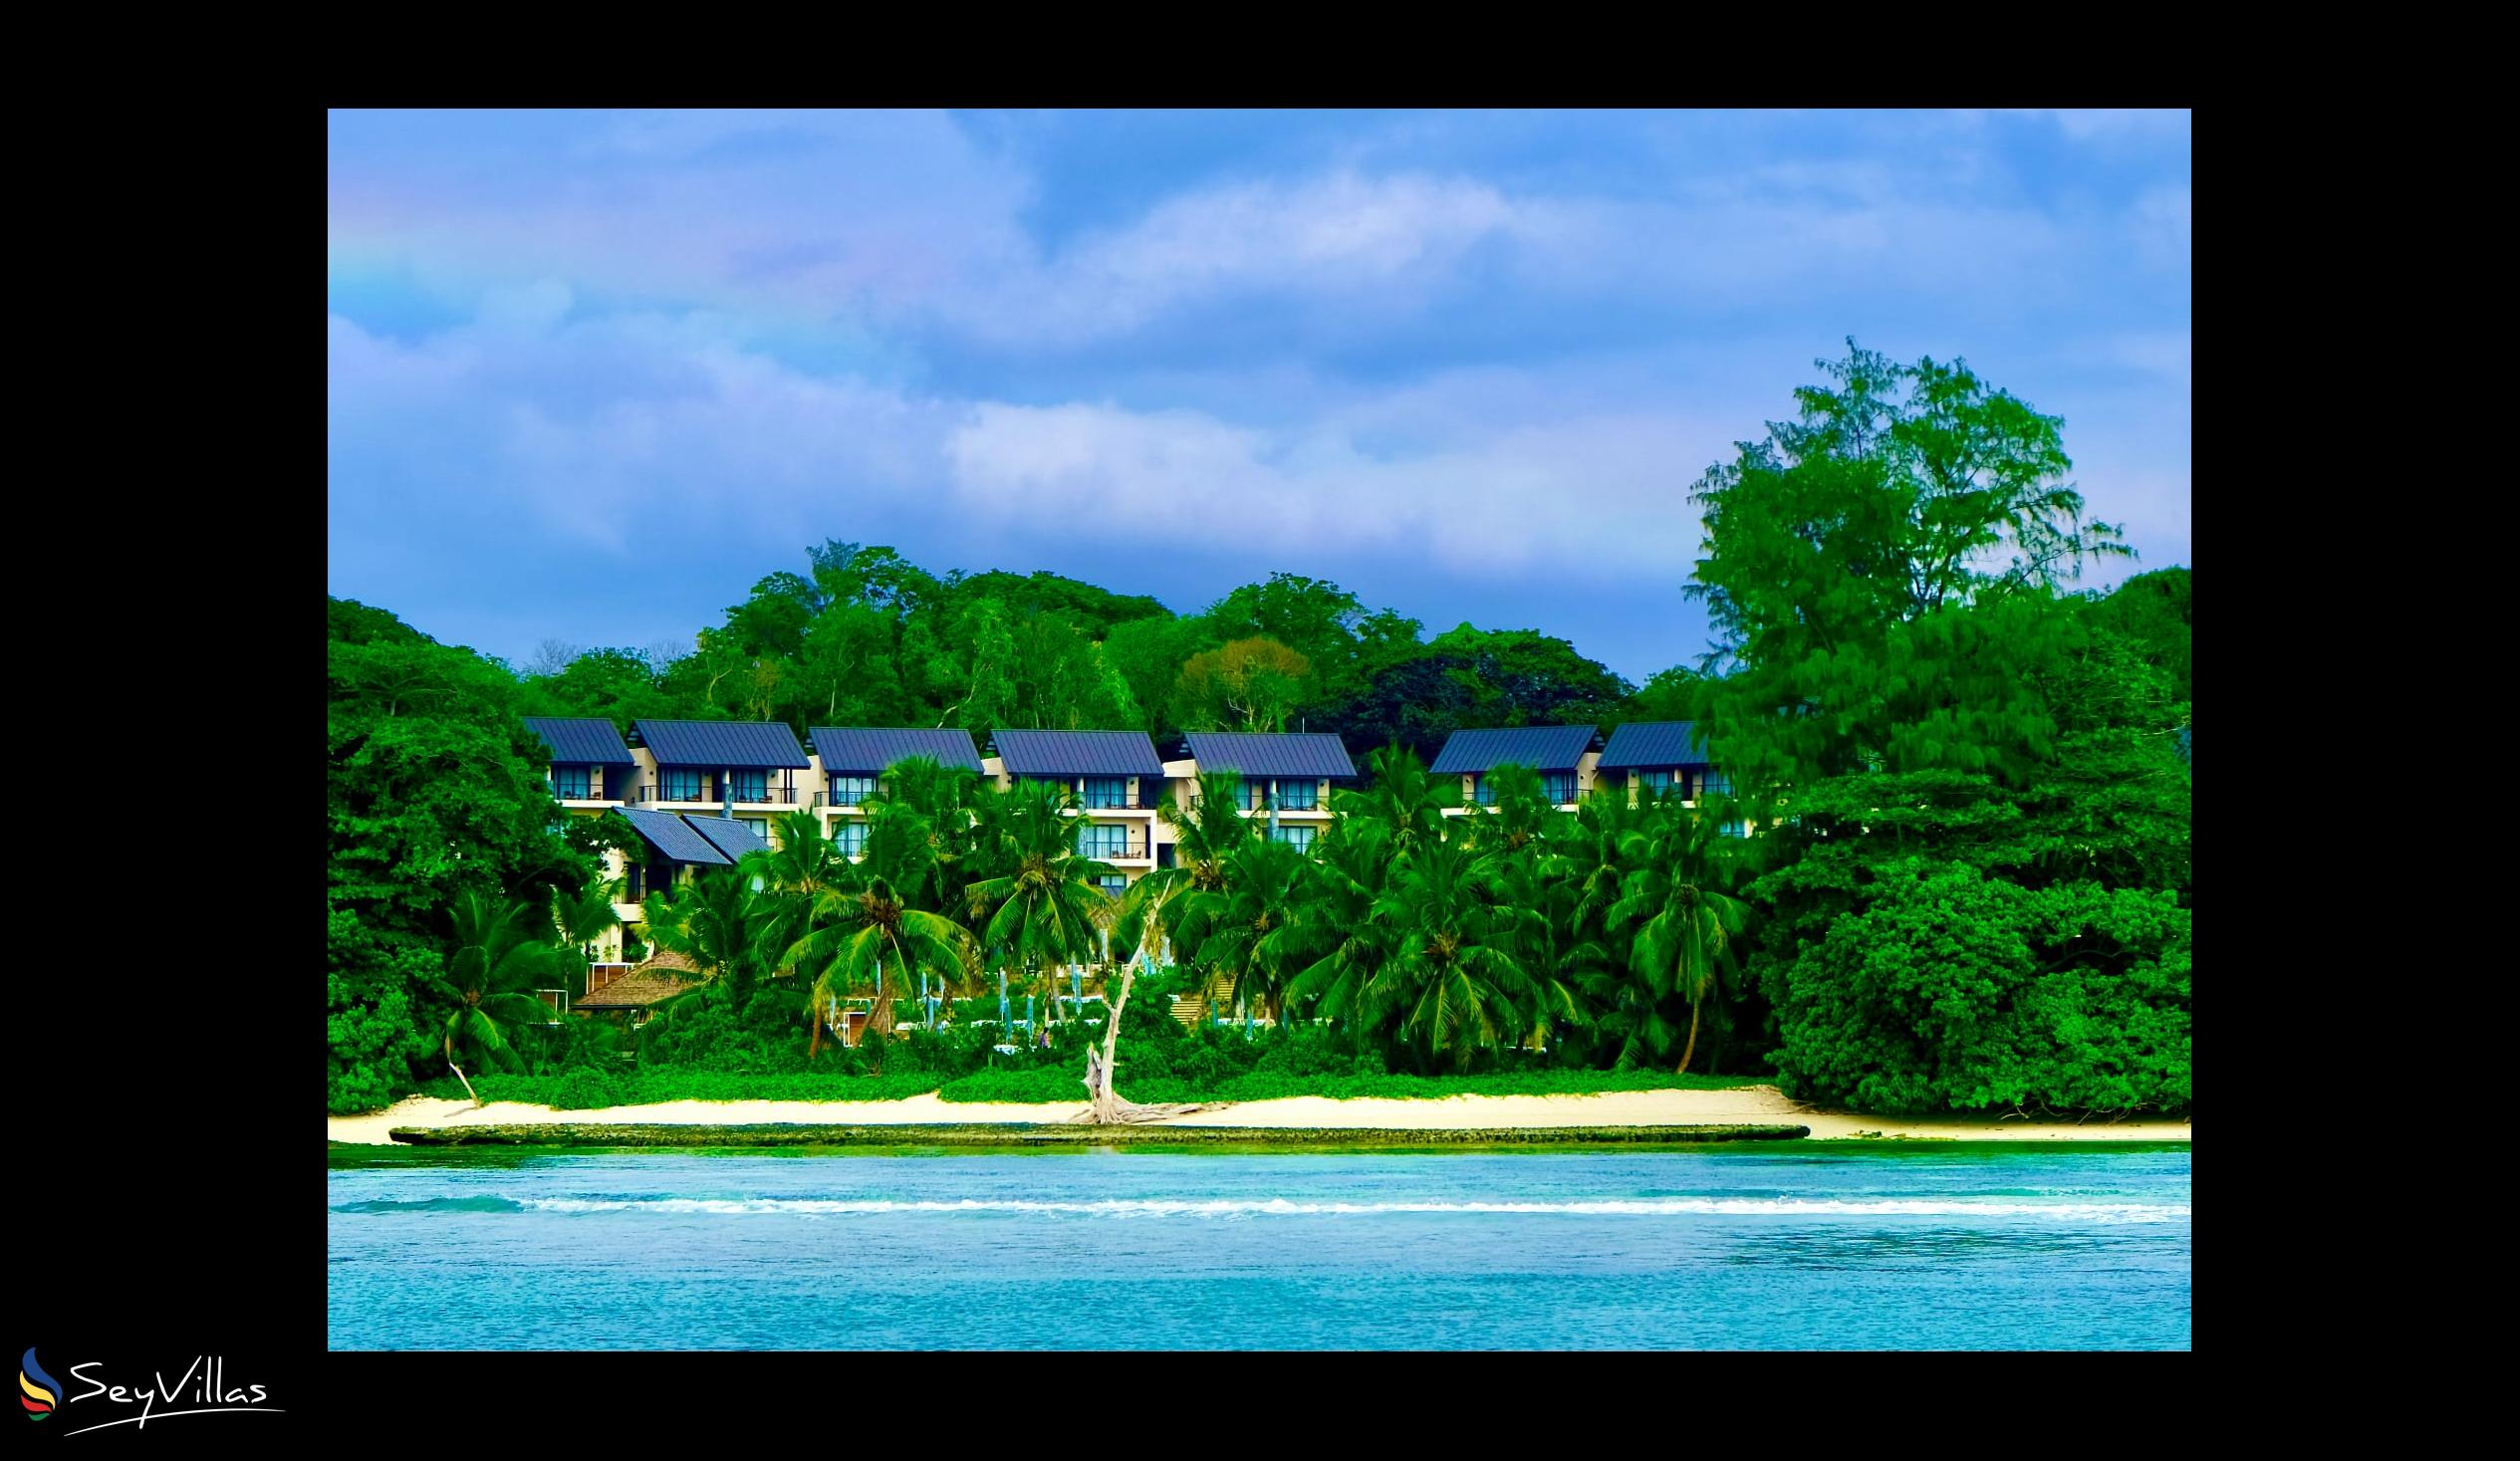 Photo 4: Club Med Seychelles - Outdoor area - Saint Anne (Seychelles)